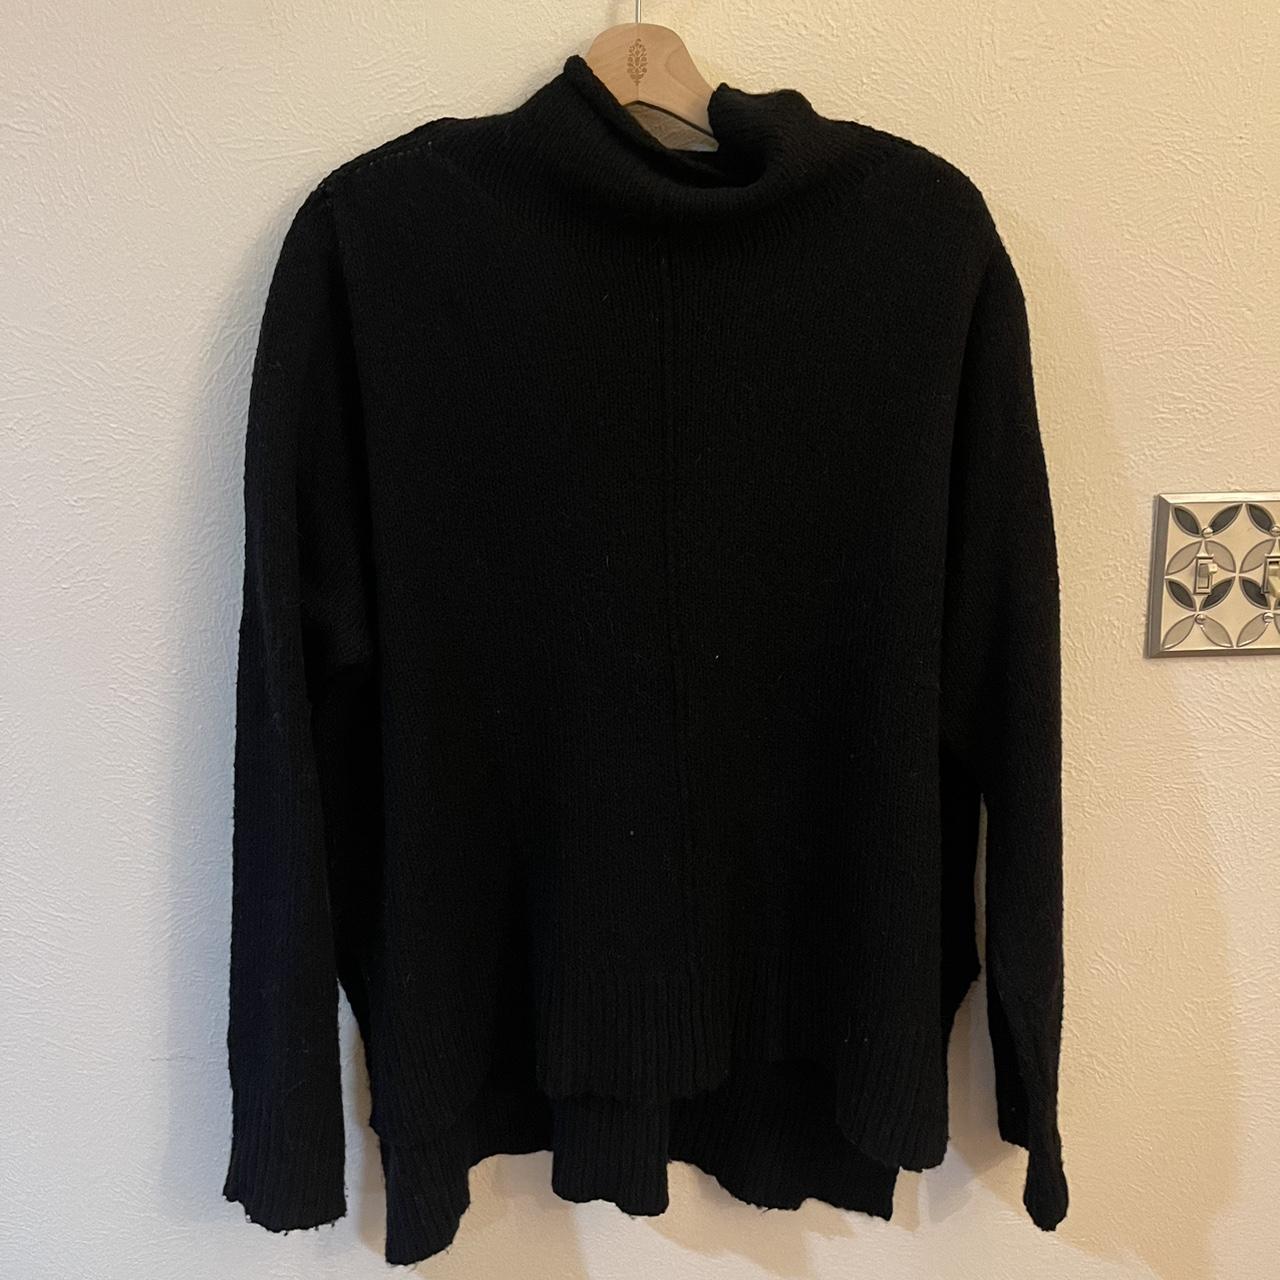 Black mock neck sweater - Depop